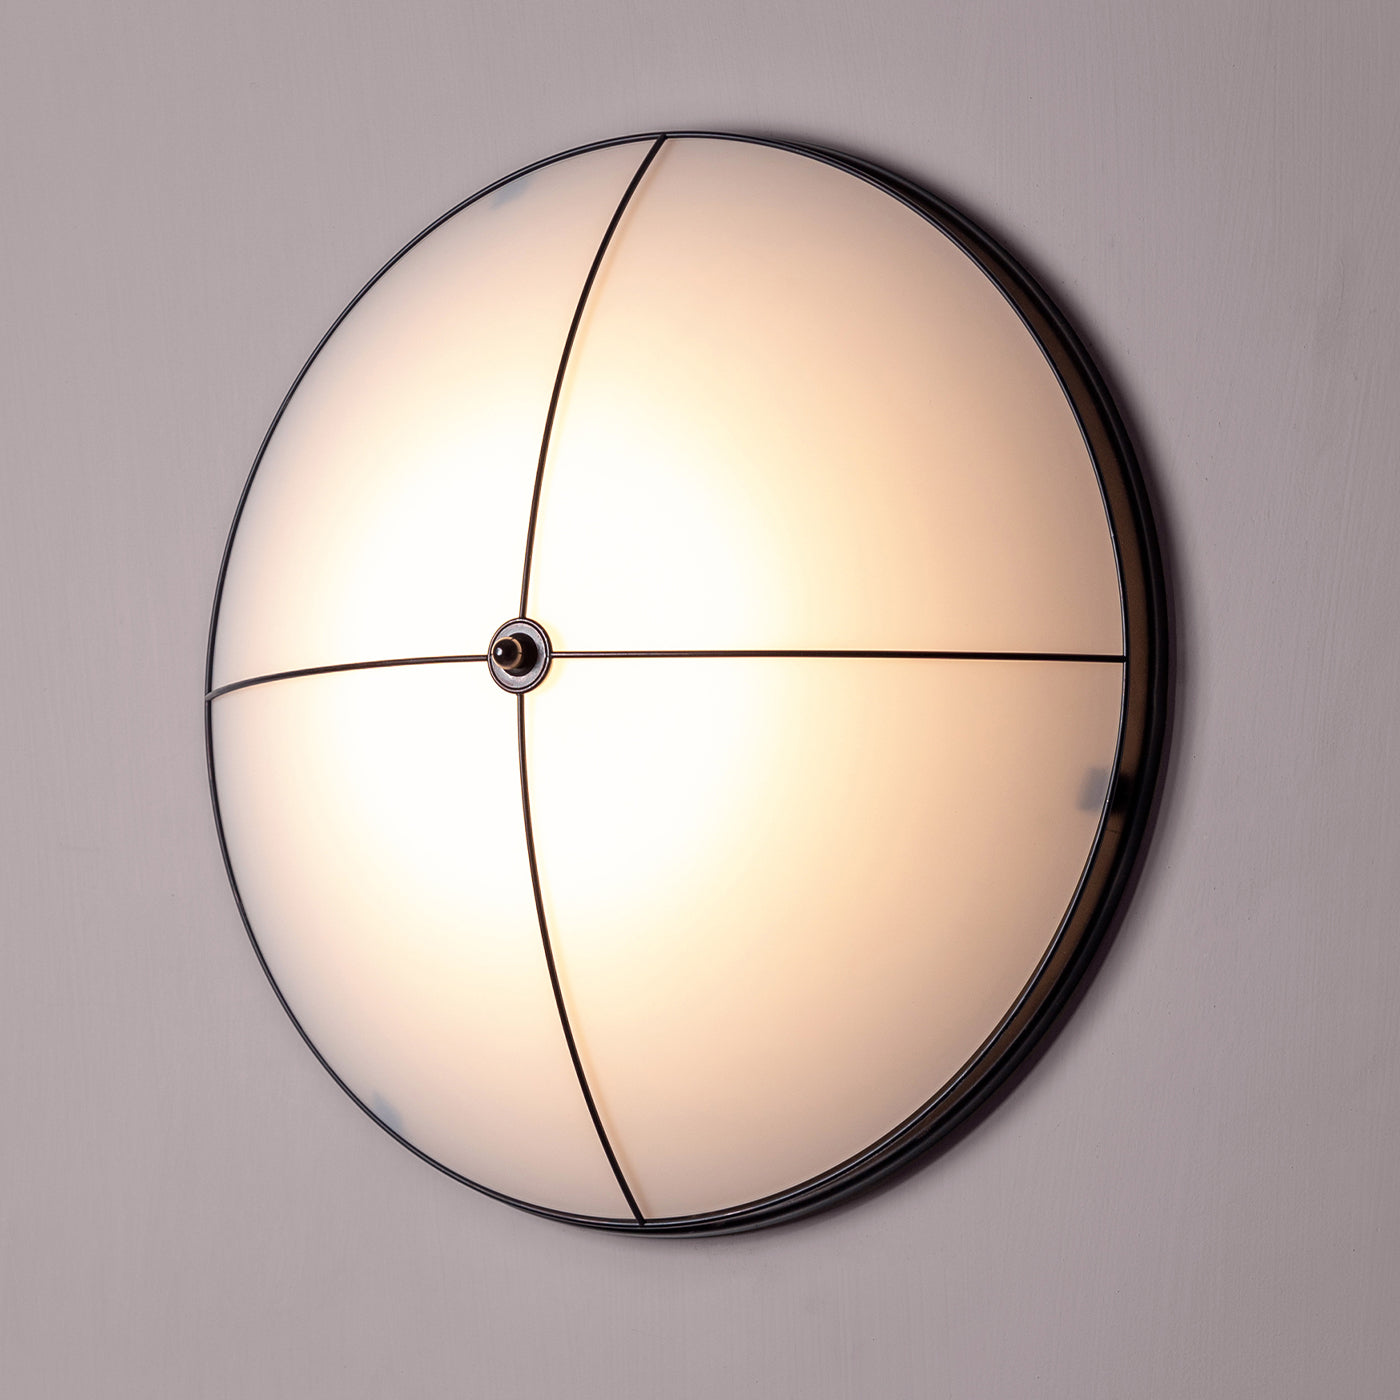 Dome White Wall Lamp by Simone Fanciullacci - Alternative view 5